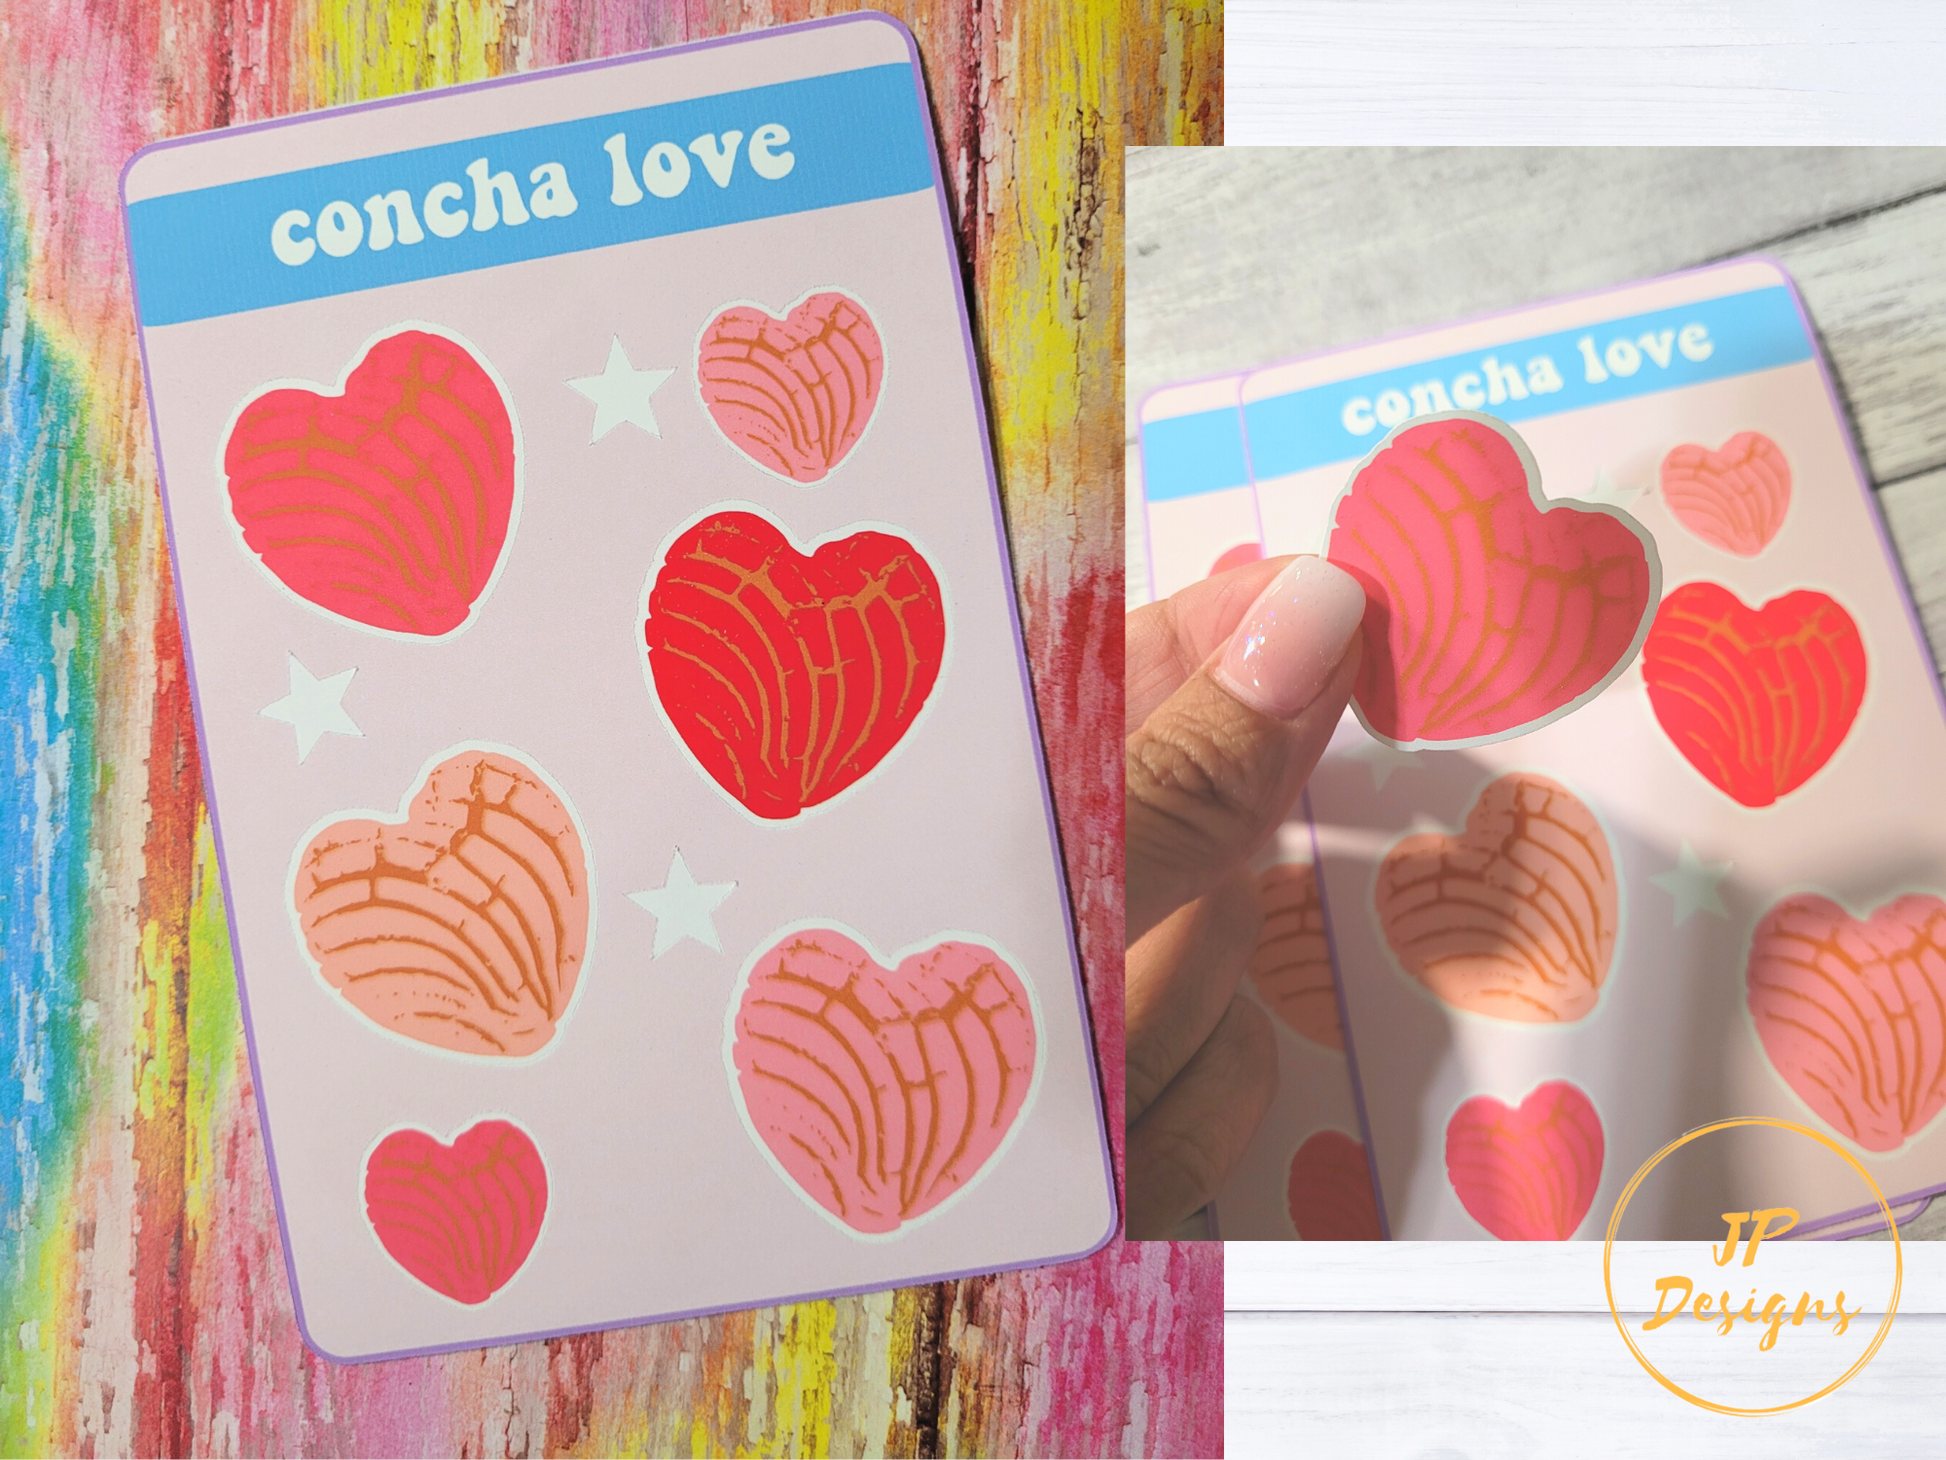 Concha Love Sticker Sheet